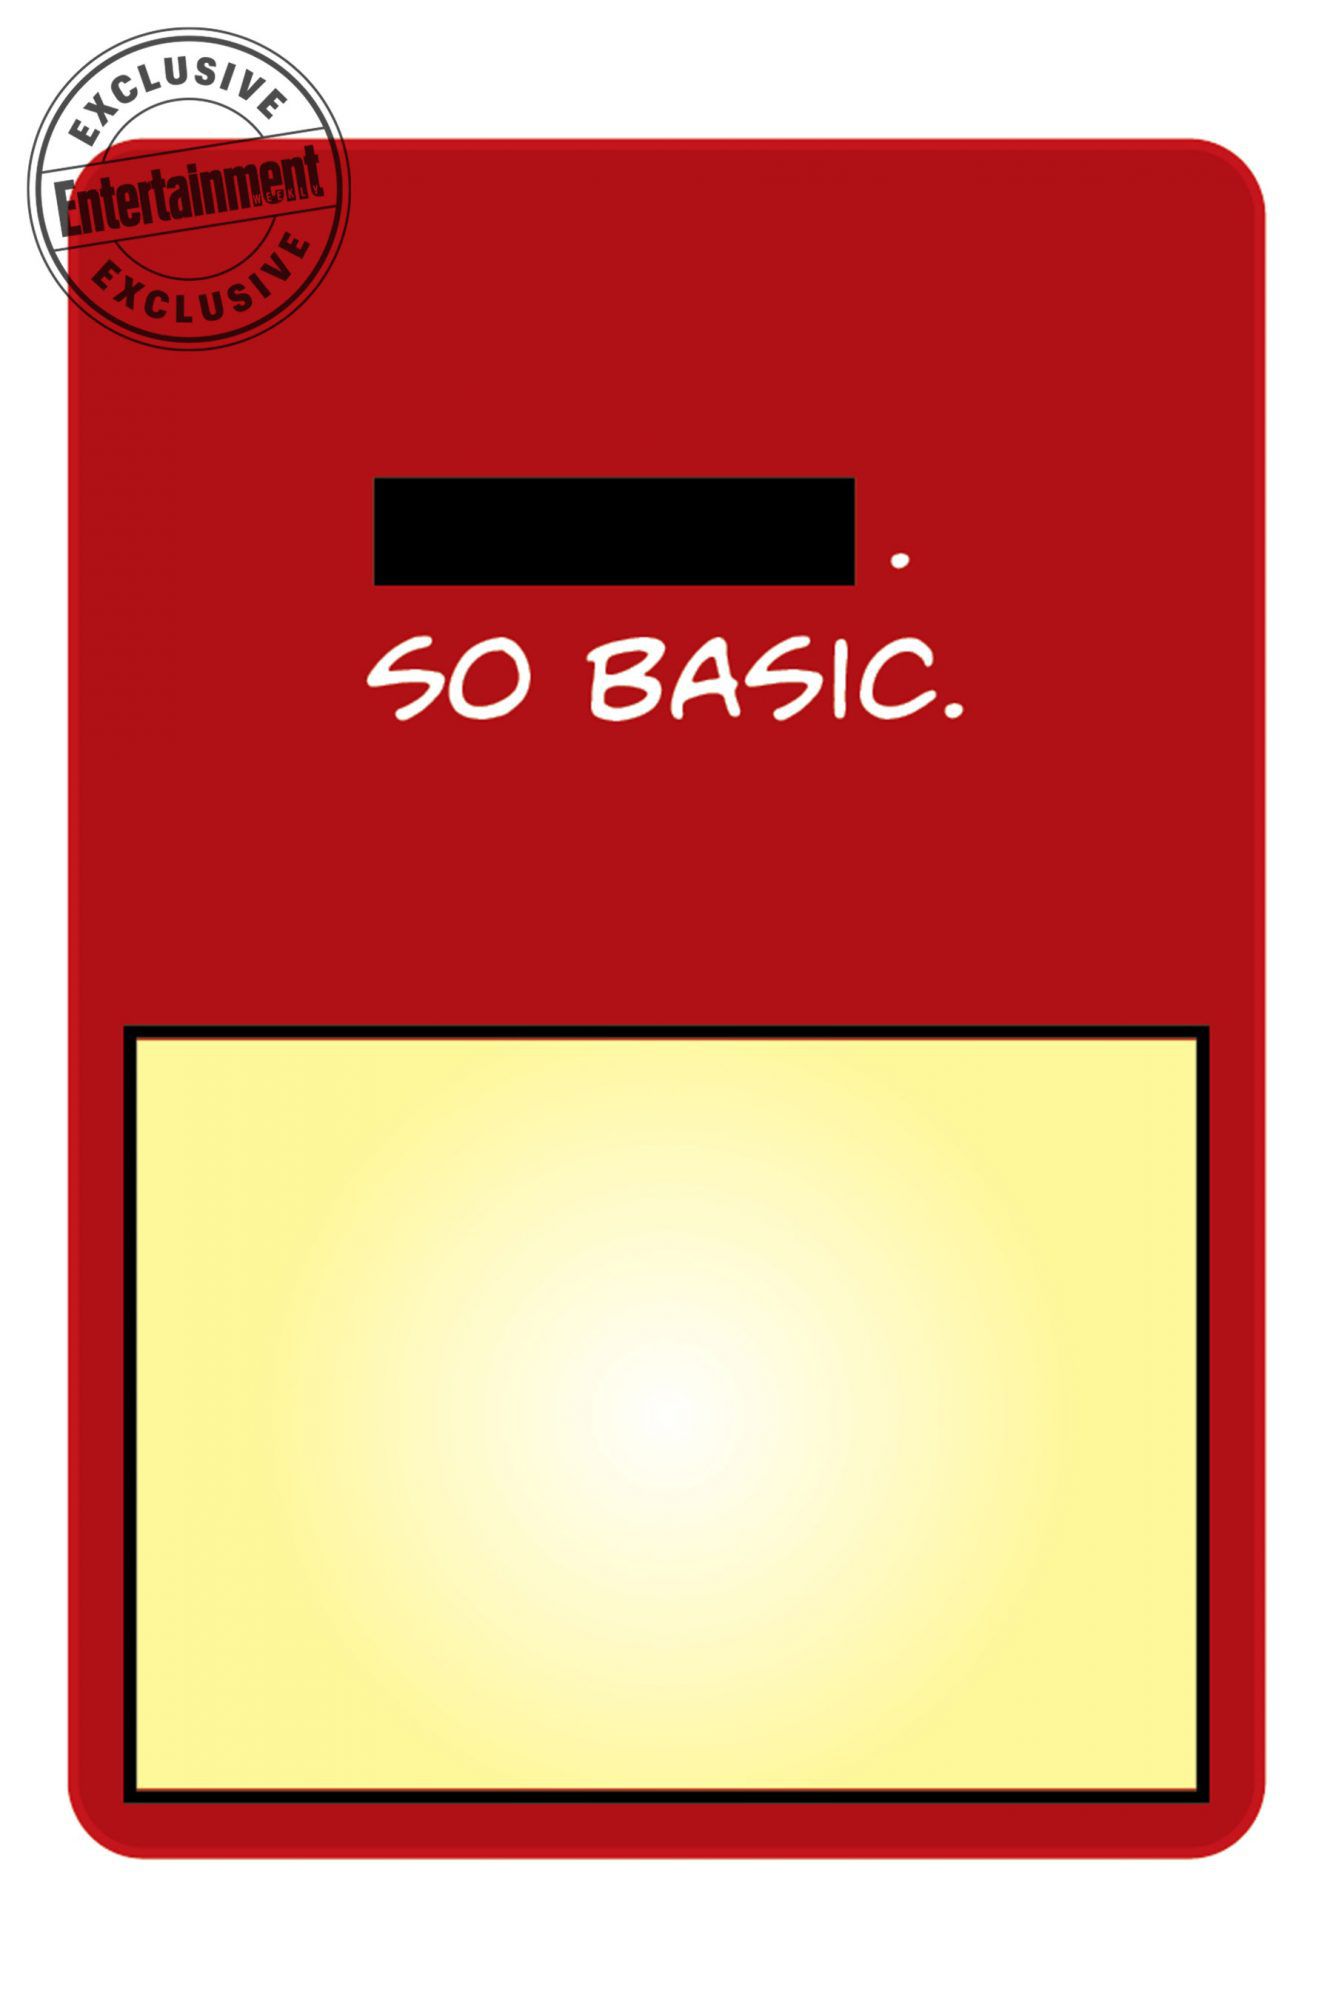 [Blank]. So basic.